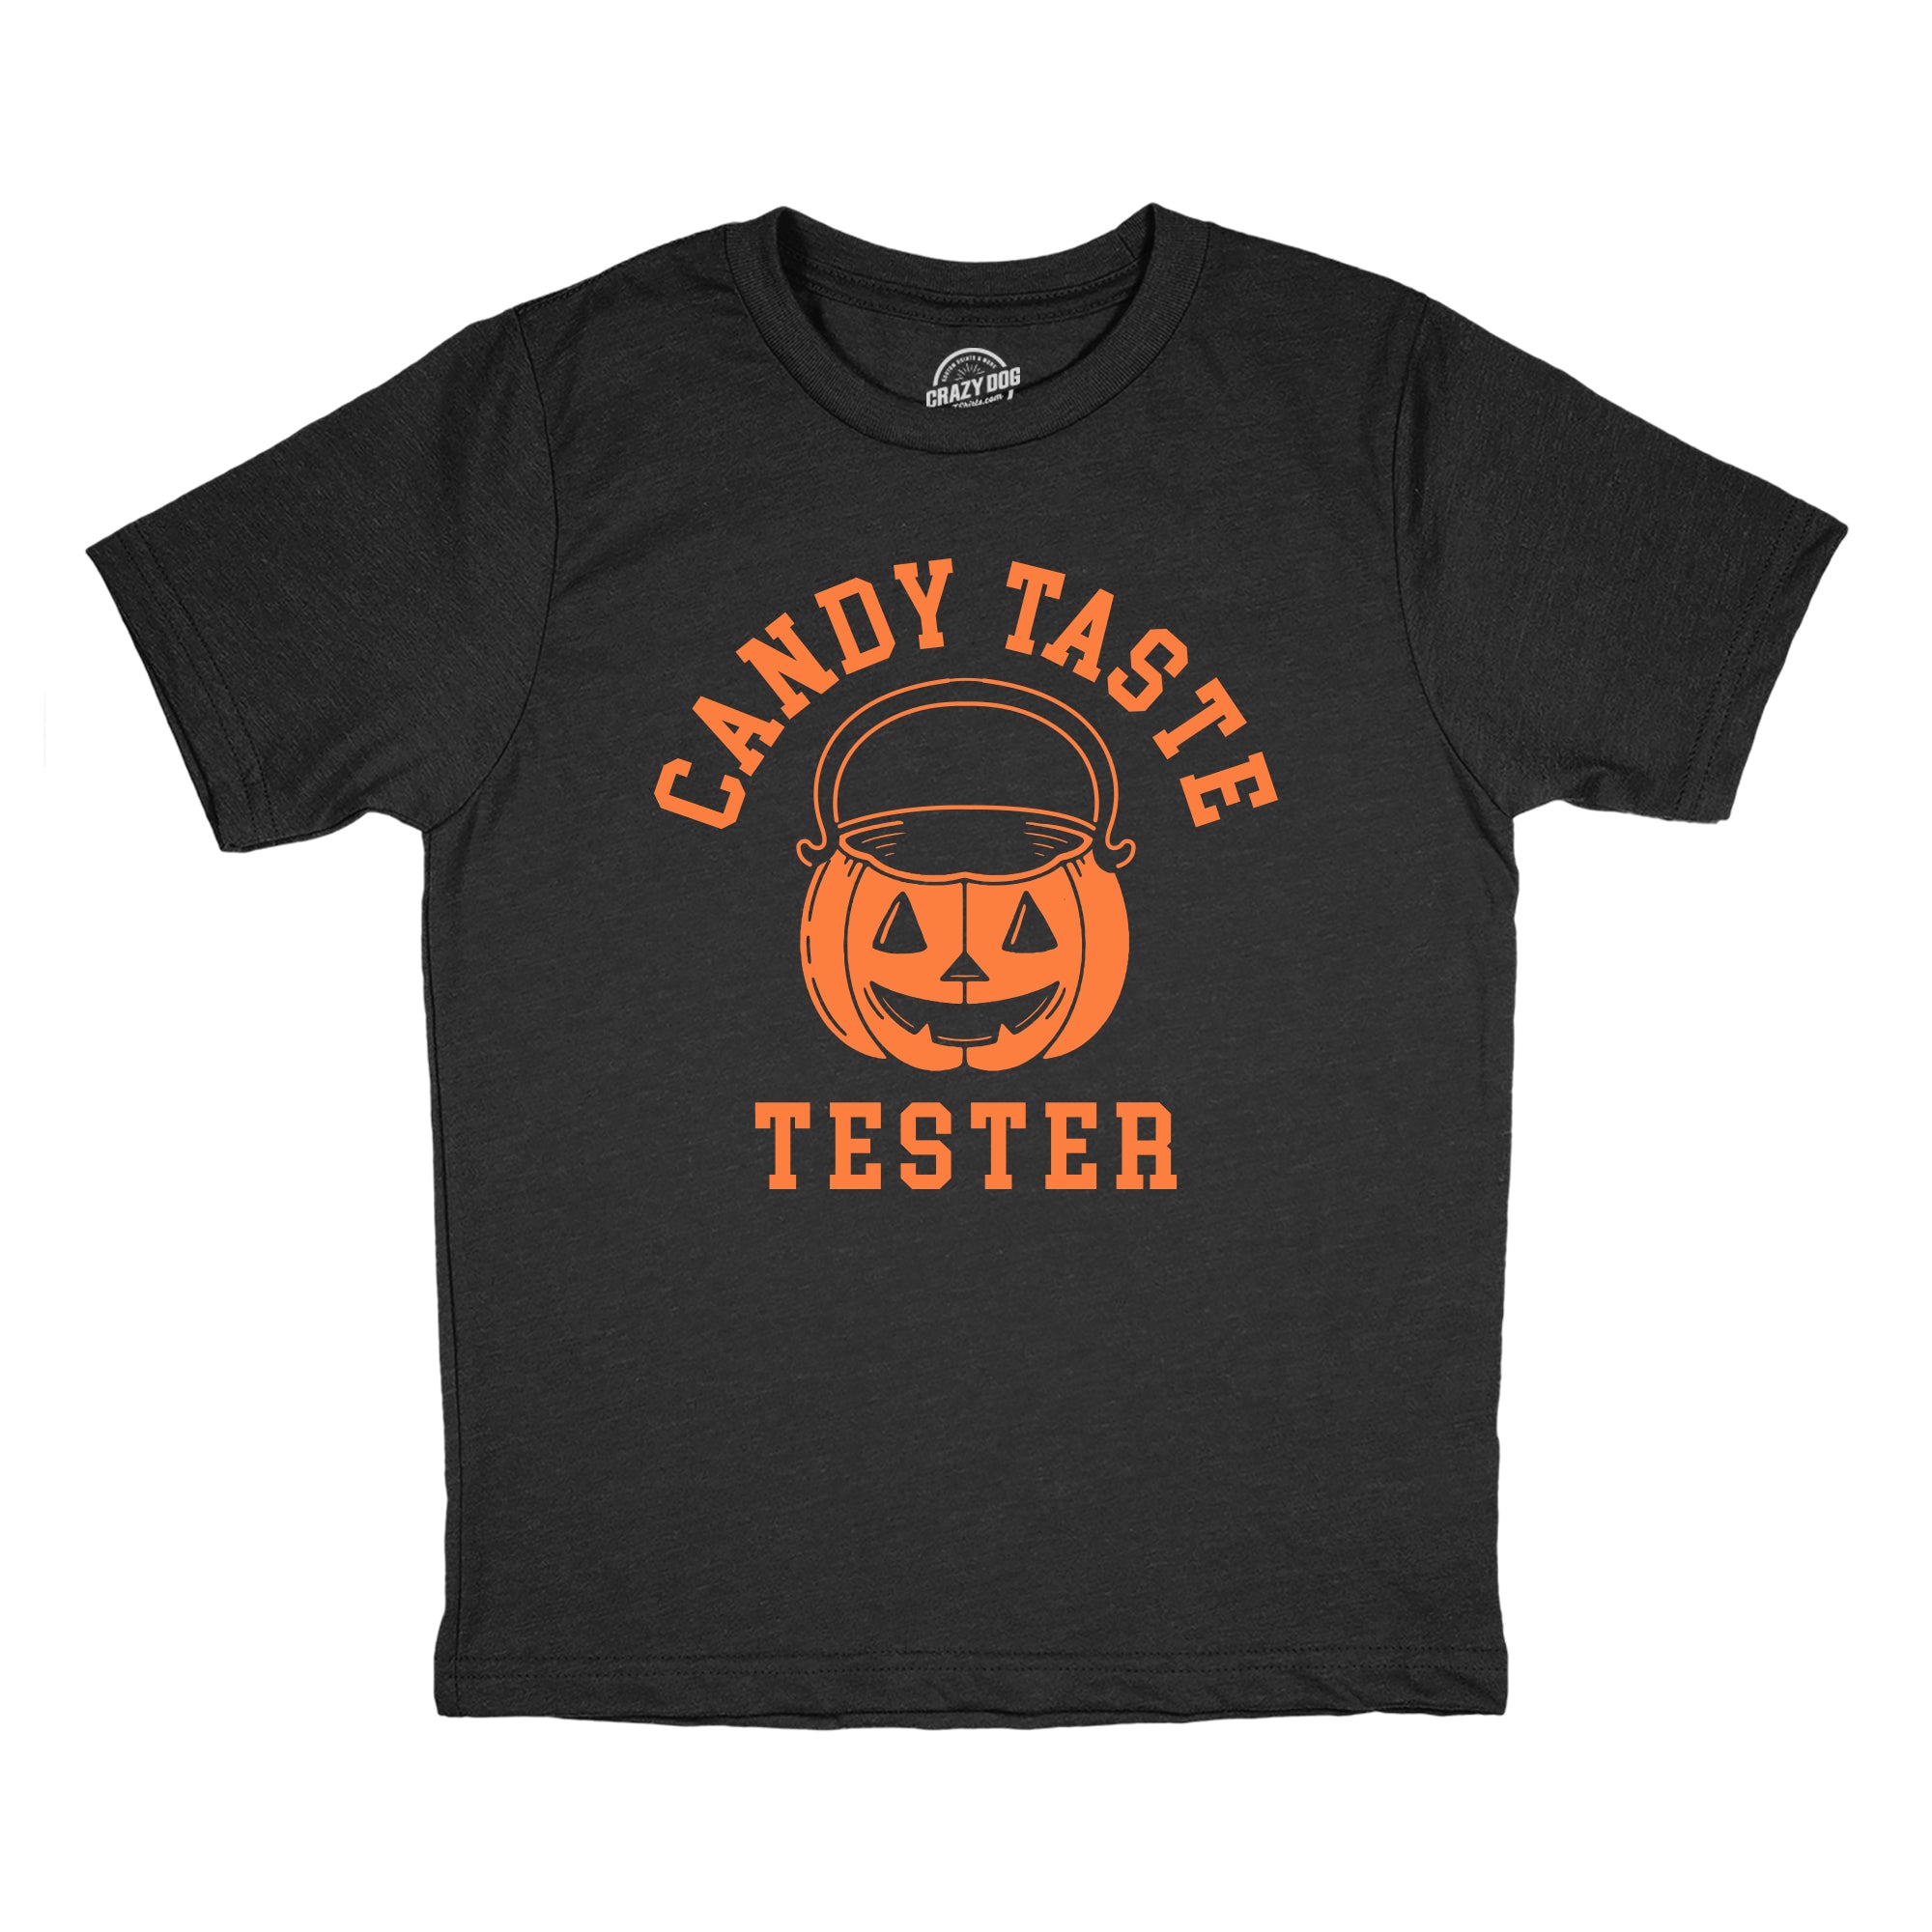 Funny Heather Black - TASTE Candy Taste Tester Youth T Shirt Nerdy Halloween Food Tee